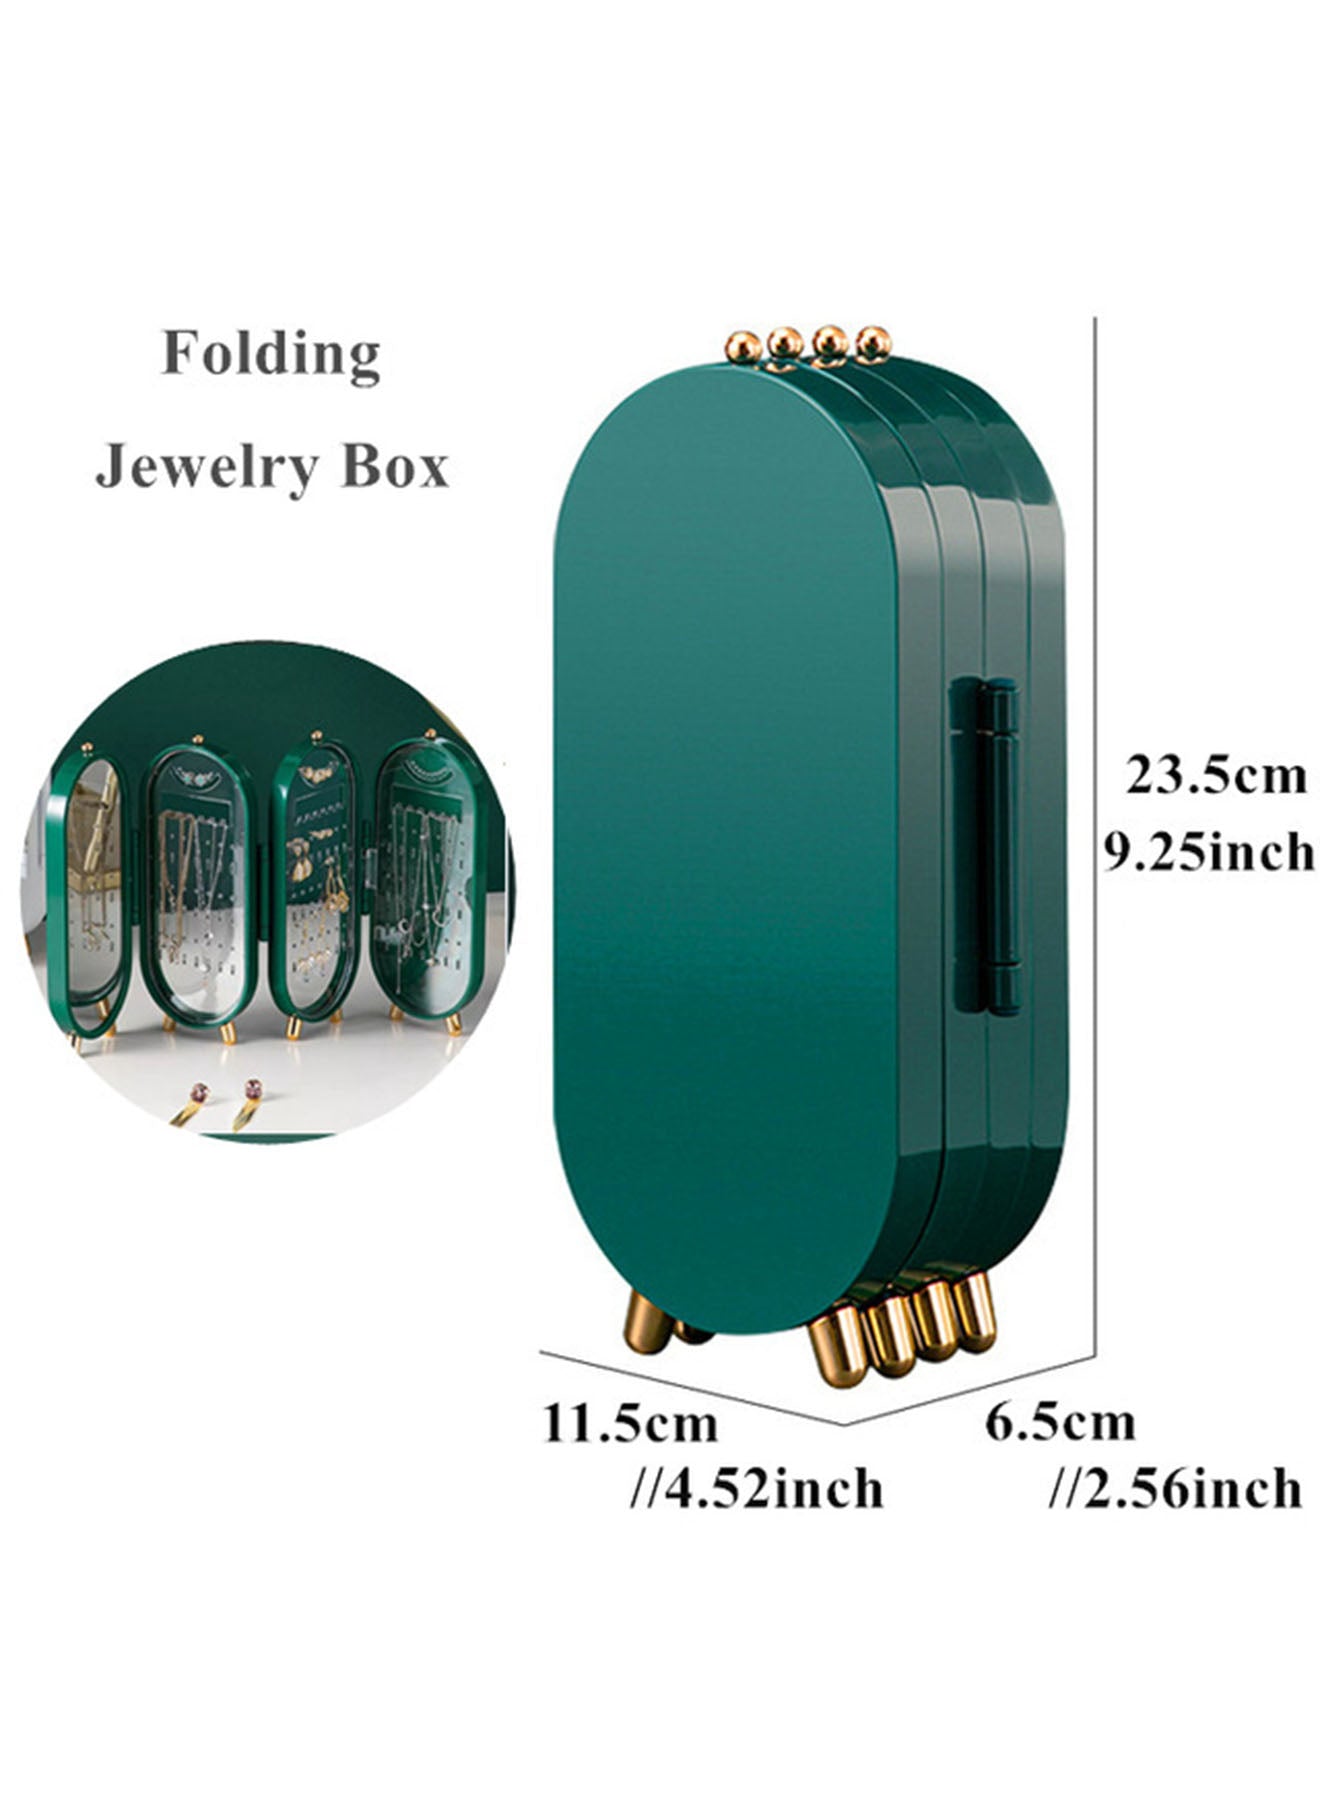 DANIM Folding Screen Jewelry Box Jewelry Storage Box Earring Necklace Hand Jewelry Box Home Multi functional Folding Portable Display Stand